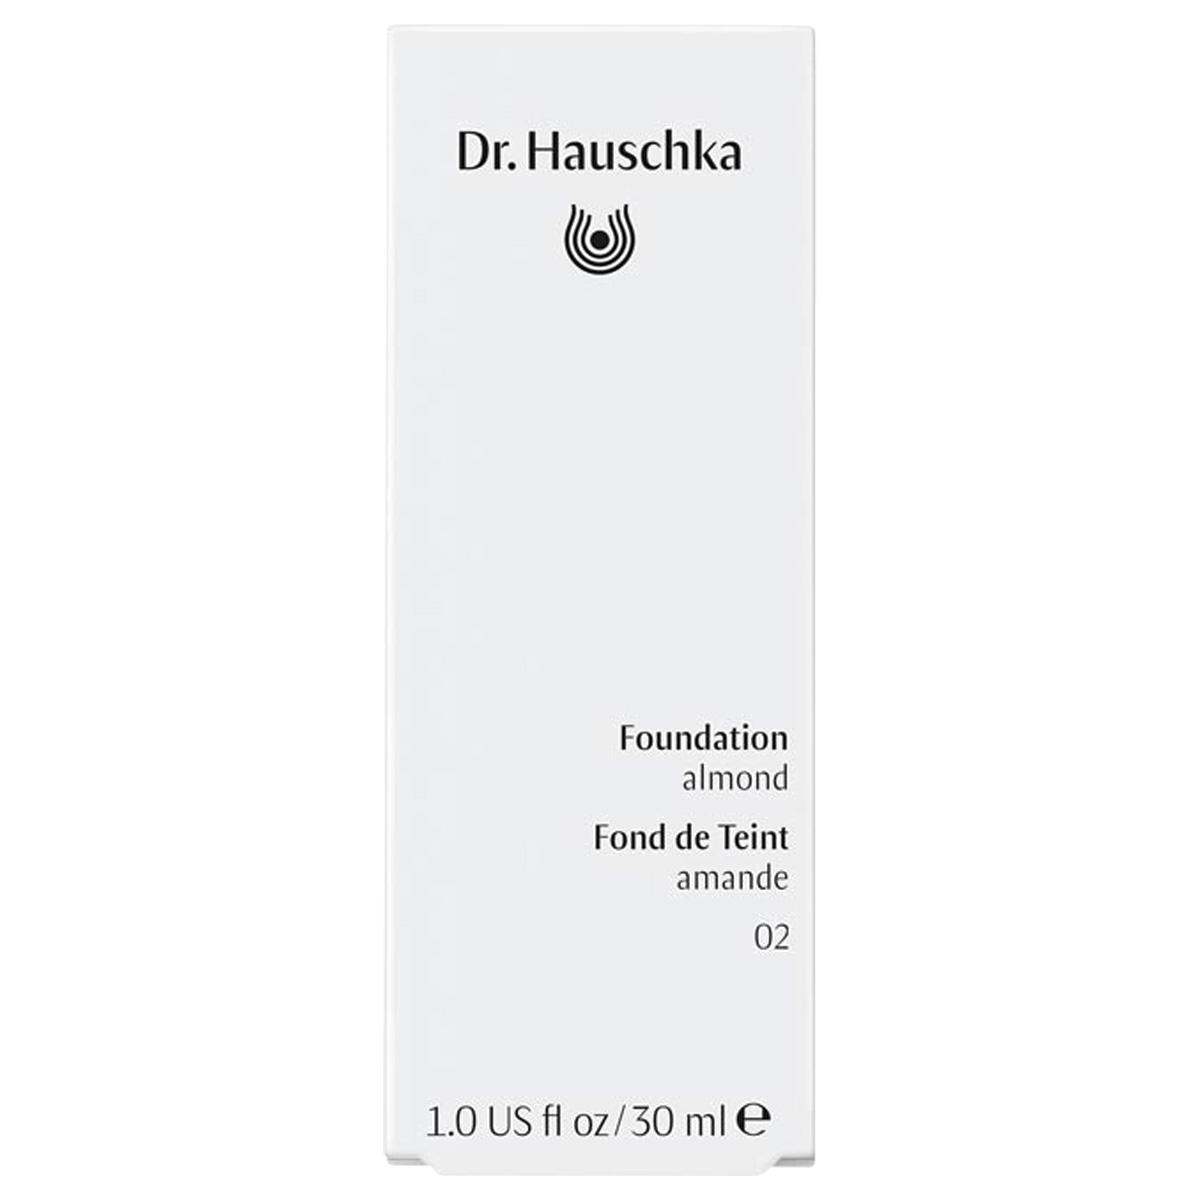 Dr. Hauschka Fondation 02 amande, contenu 30 ml - 2